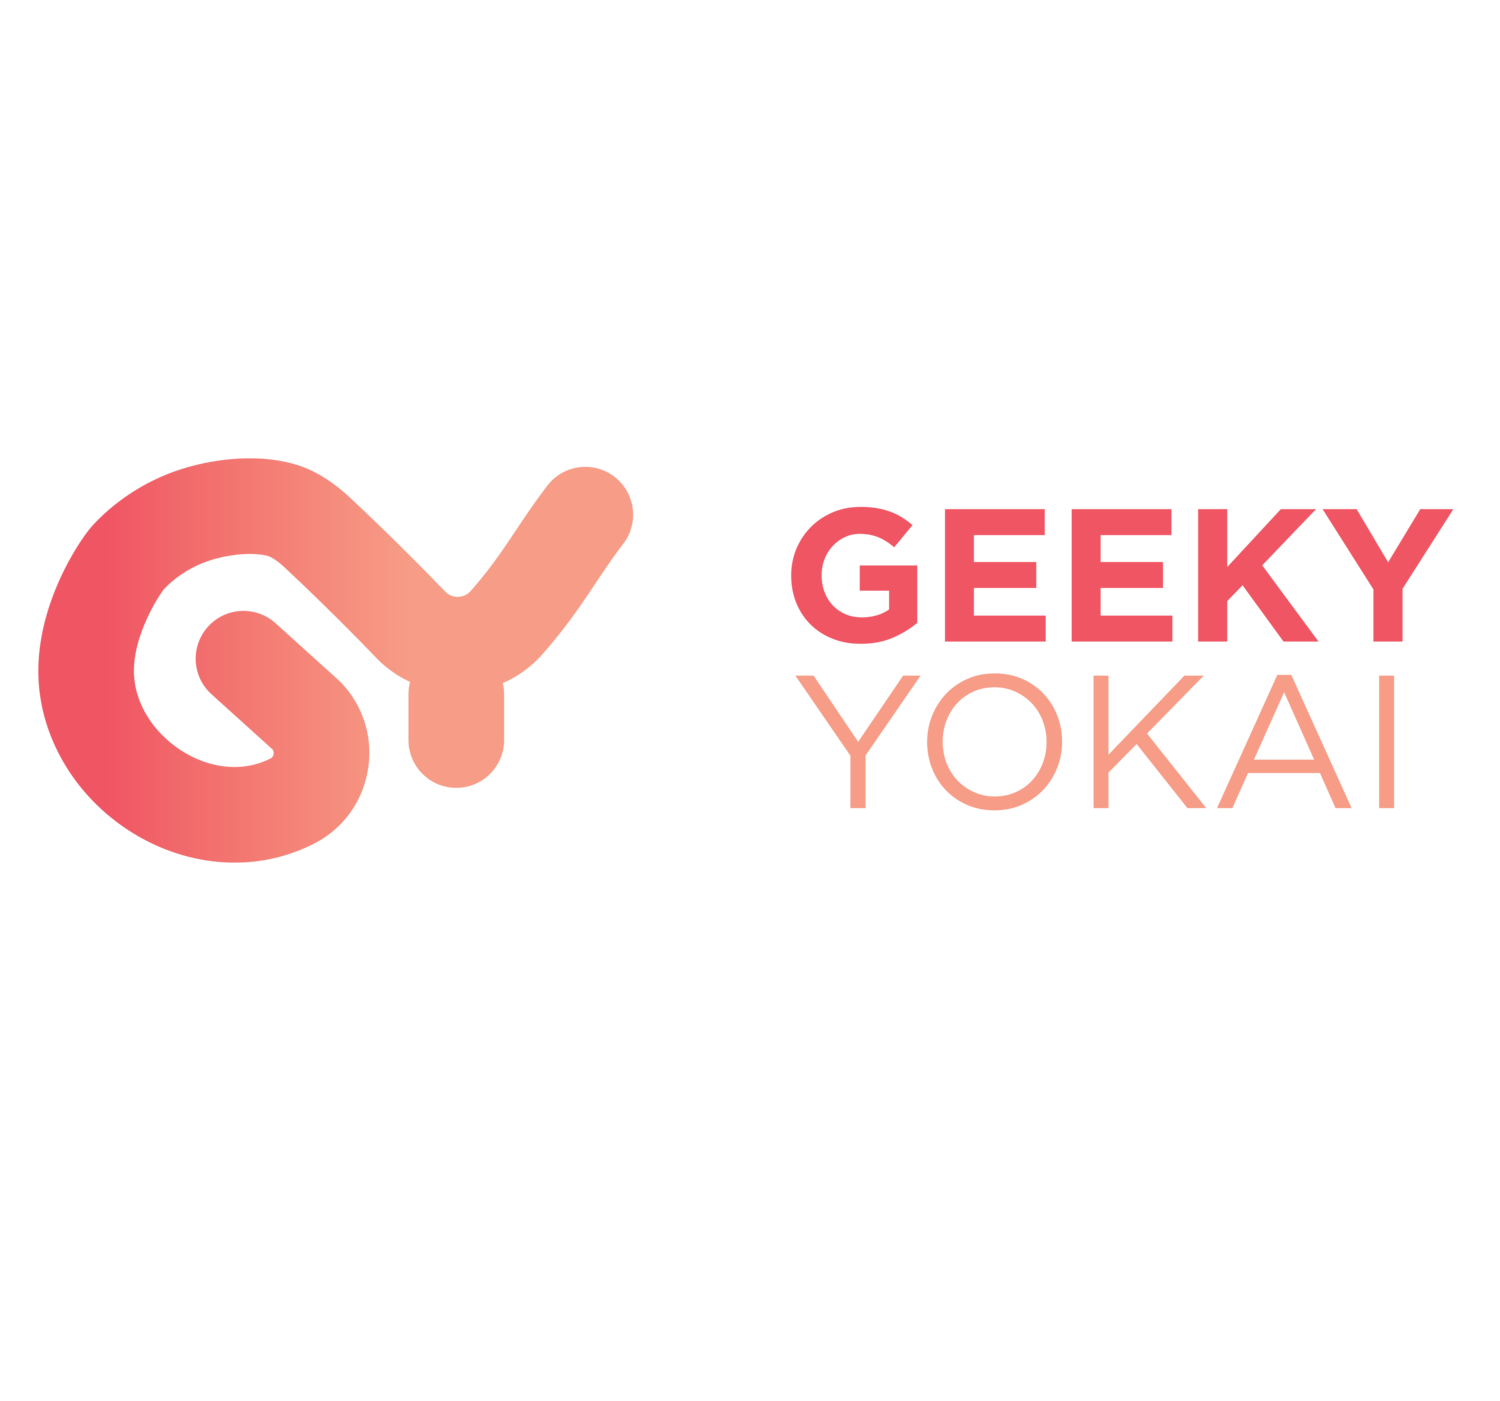 The Geeky Yokai